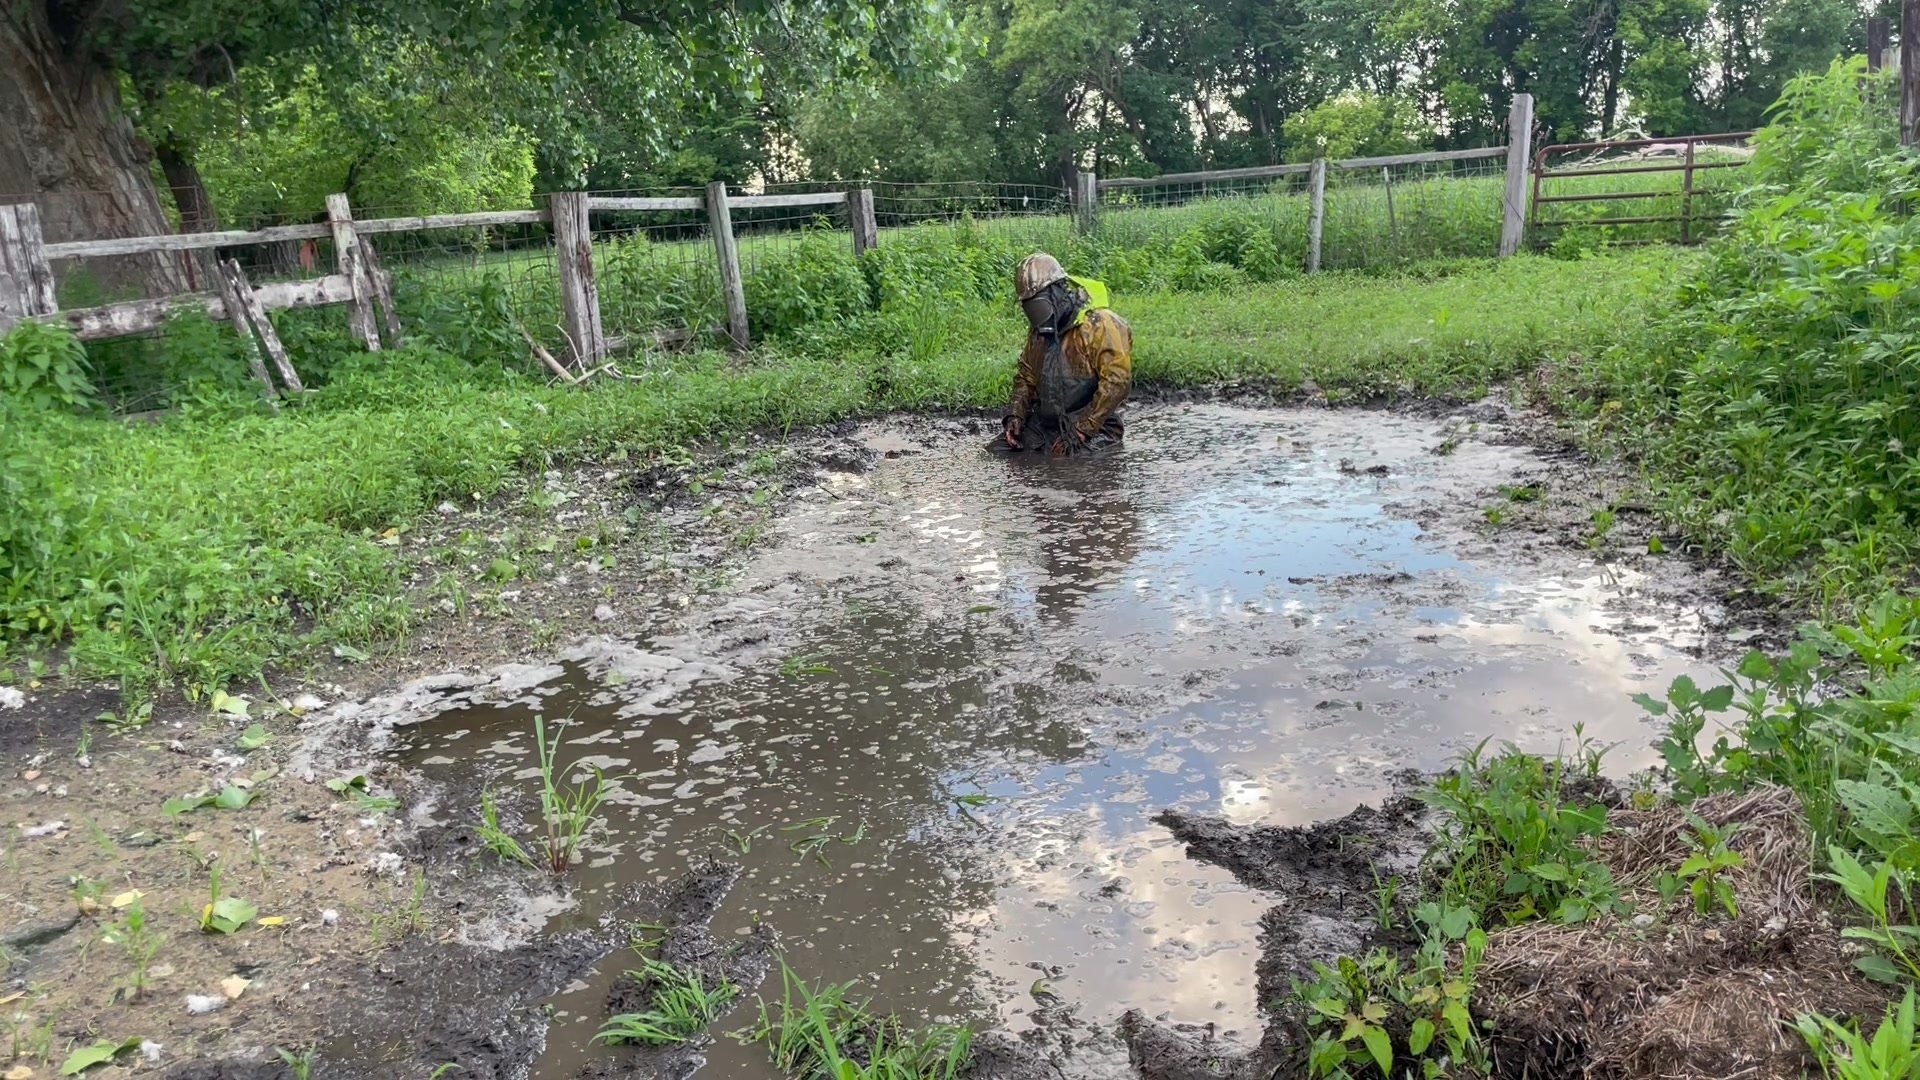 rainwear in cow manure and mud